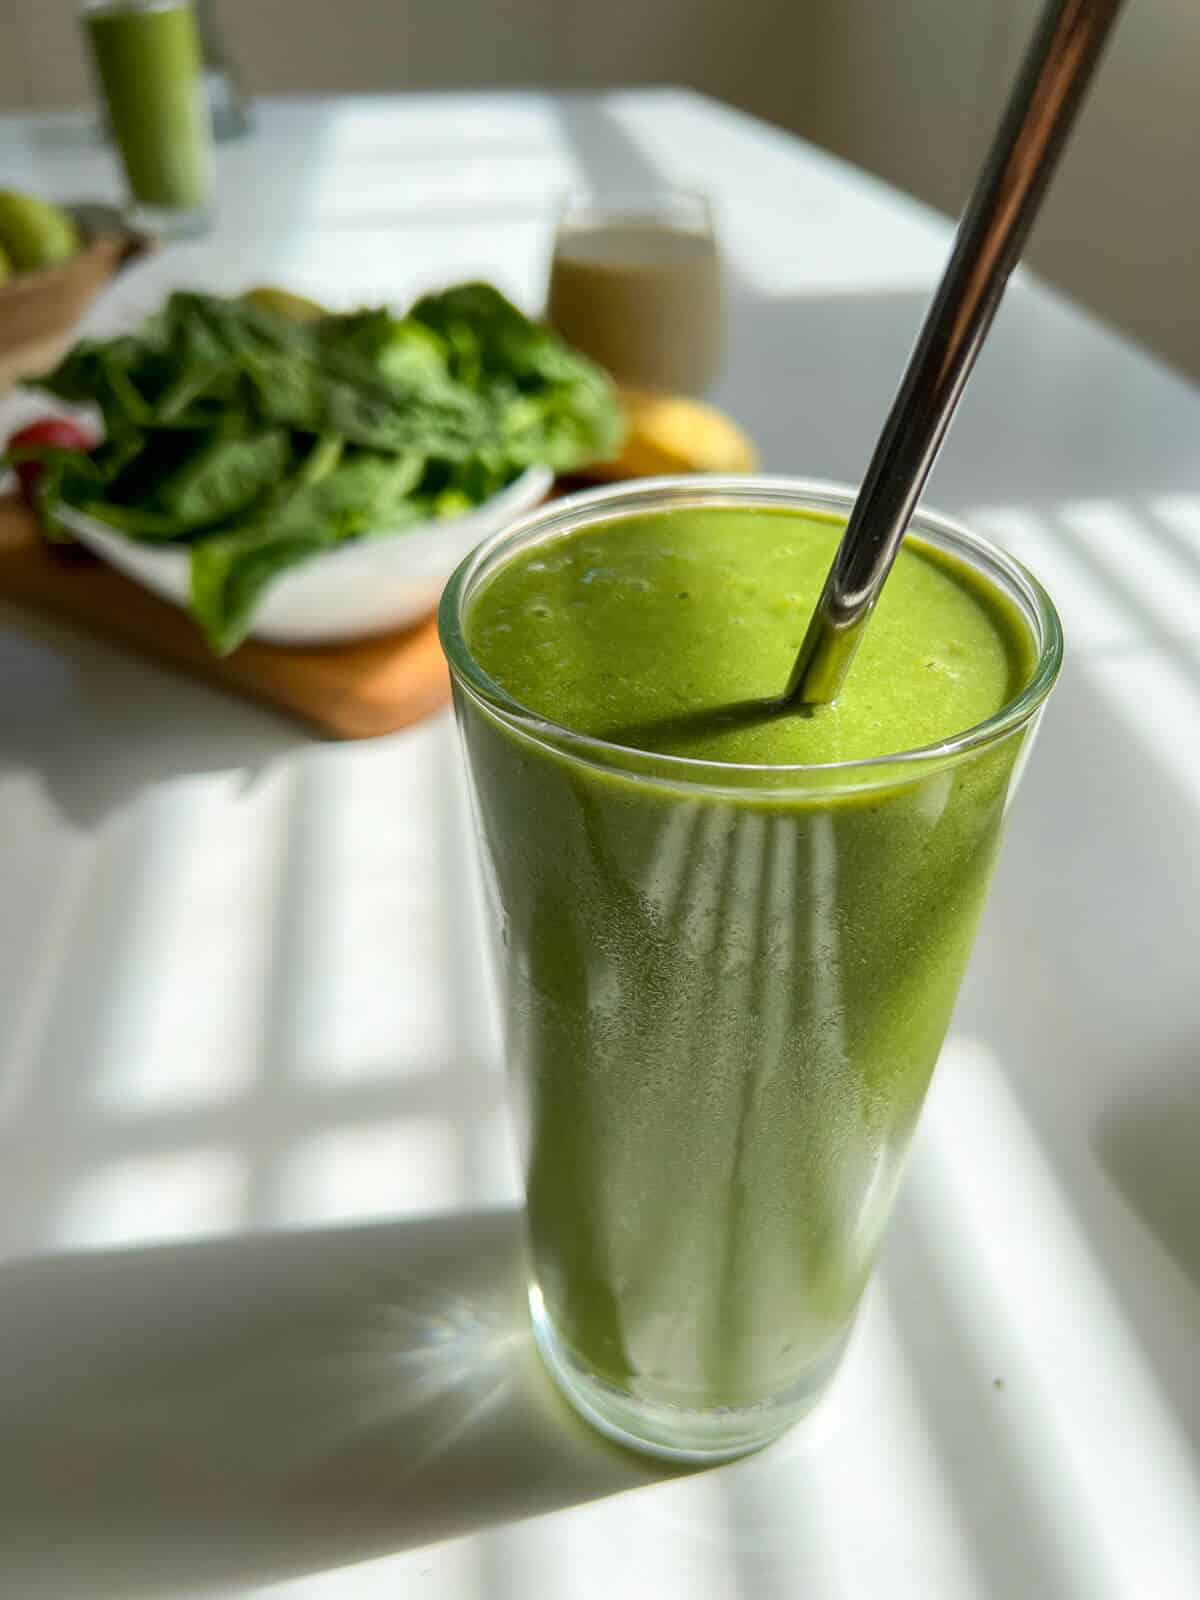 enjoy your smoothie with eco-friendly straw.